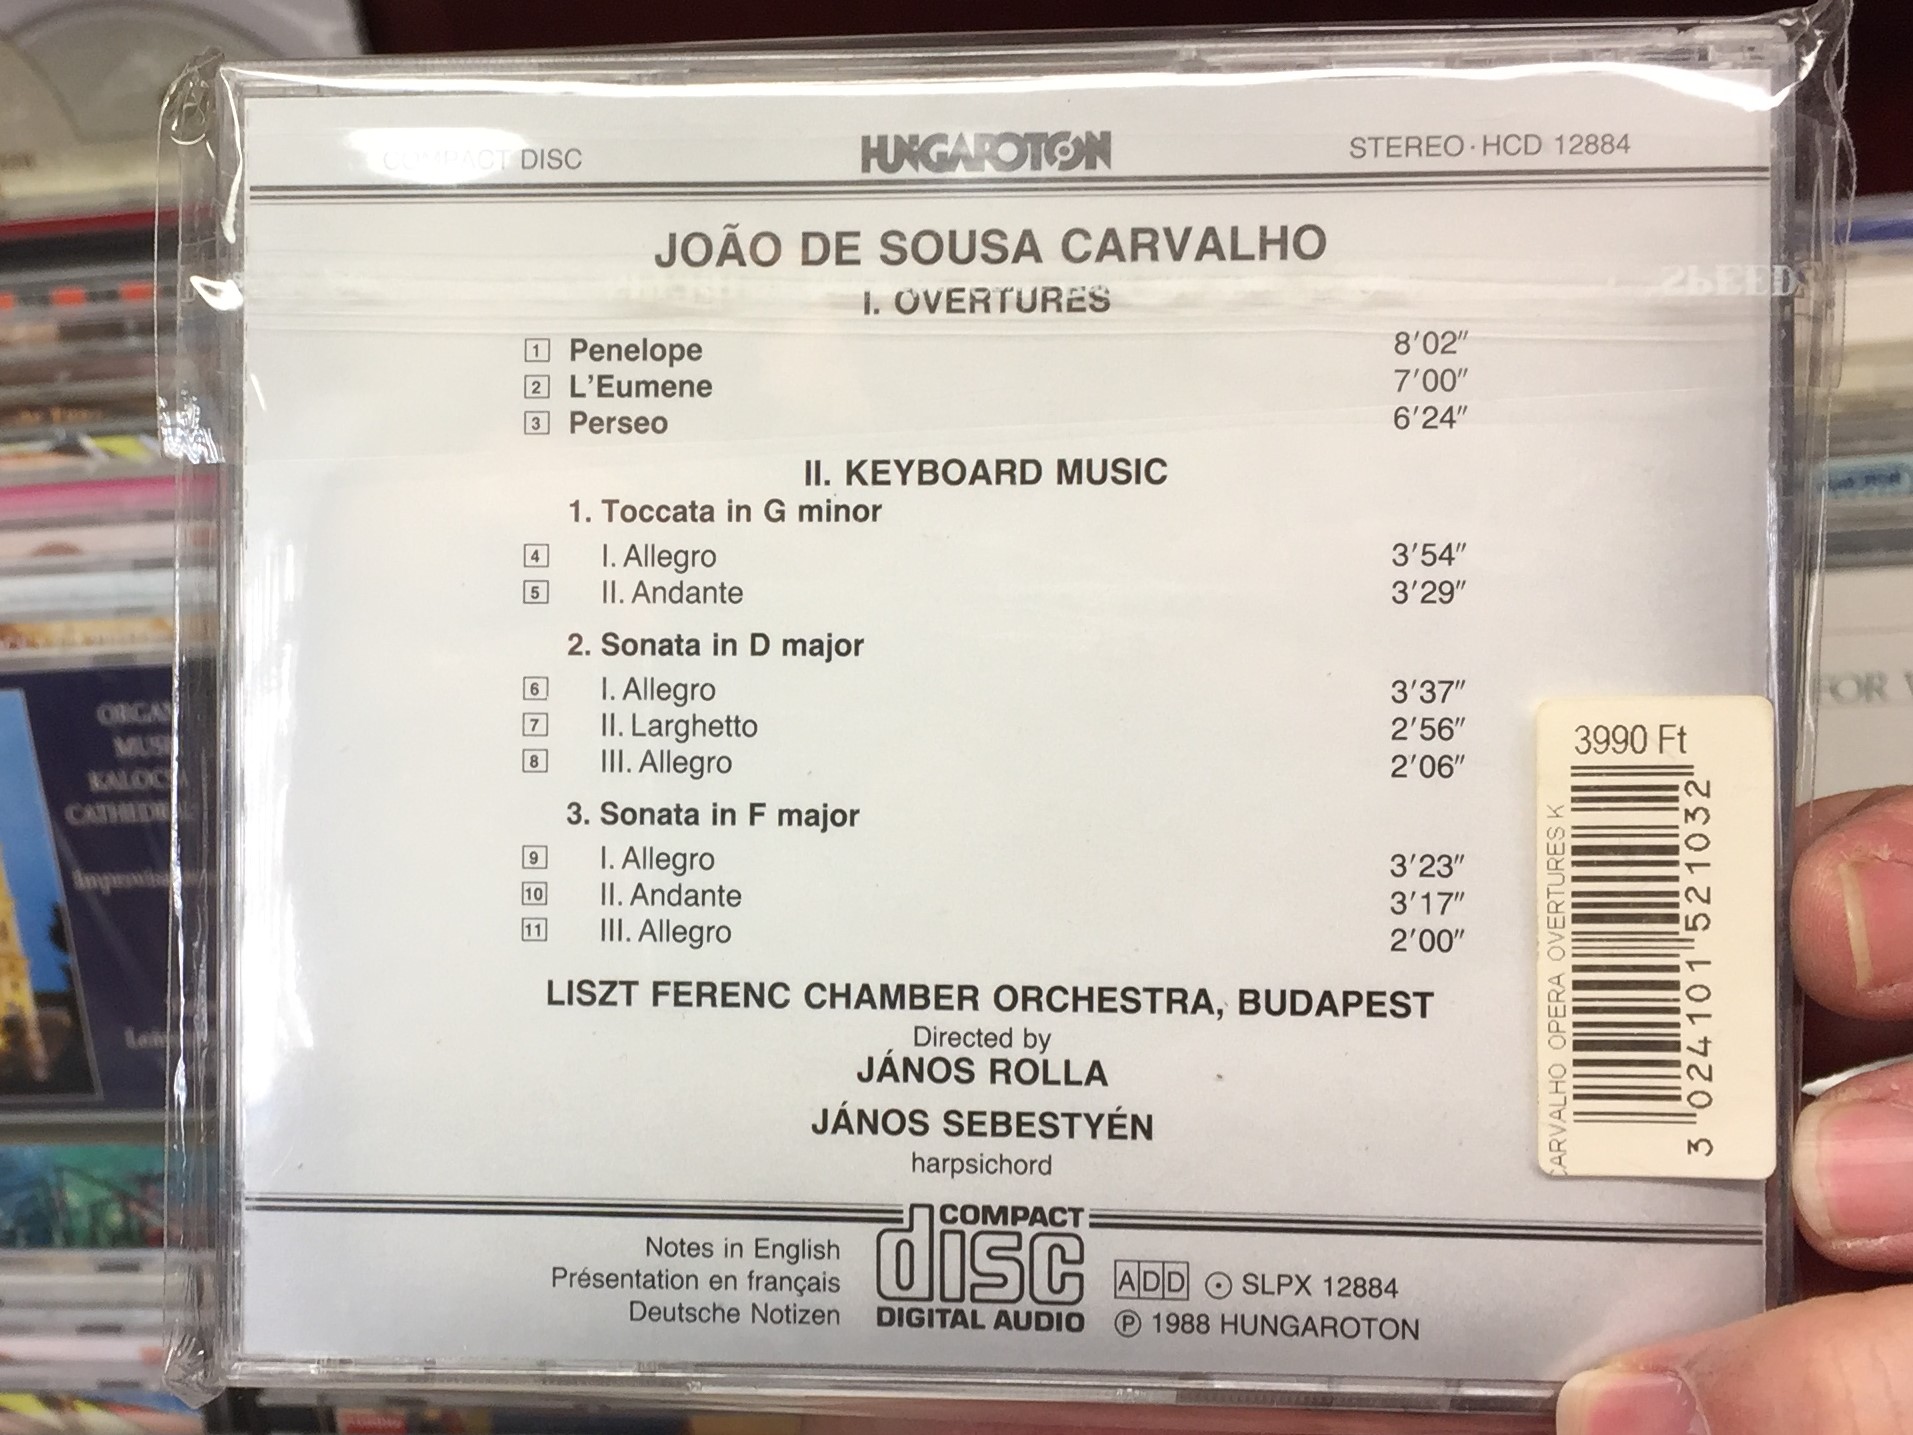 sousa-carvalho-opera-overtures-keyboard-music-liszt-ferenc-chamber-orchestra-budapest-j-nos-rolla-j-nos-sebesty-n-harpsichord-hungaroton-classic-audio-cd-1988-stereo-hcd-12884-2-.jpg